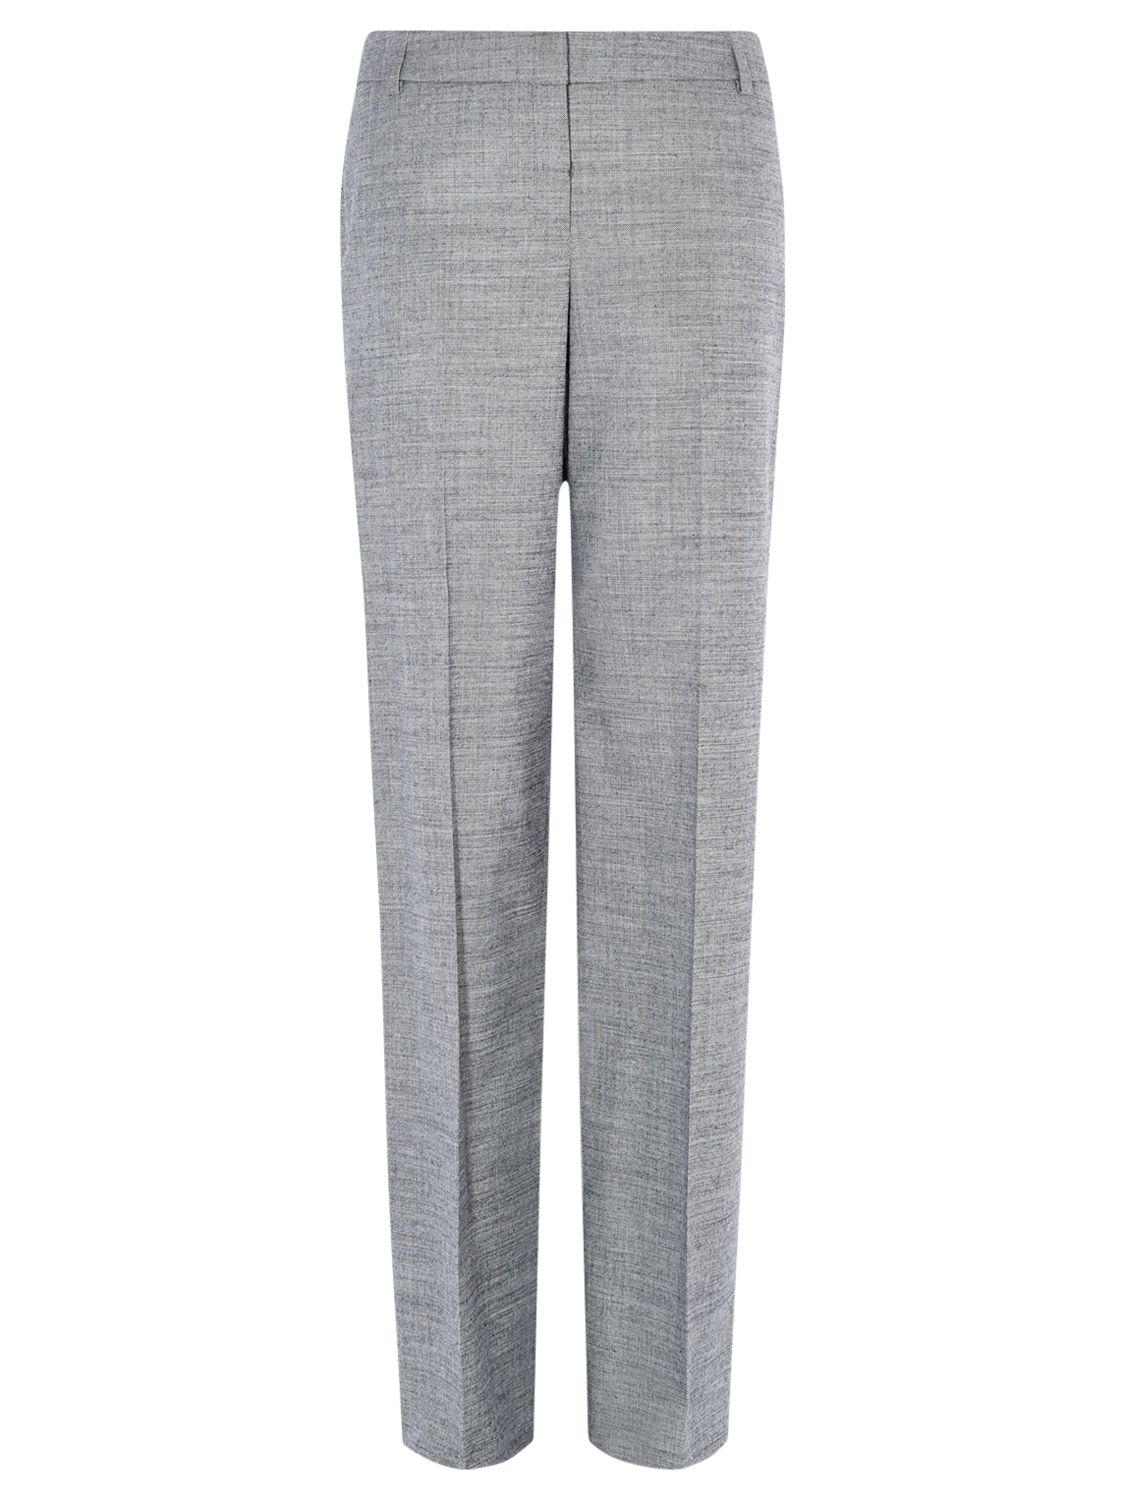 Karen Millen Tailored Folded Trousers, Grey